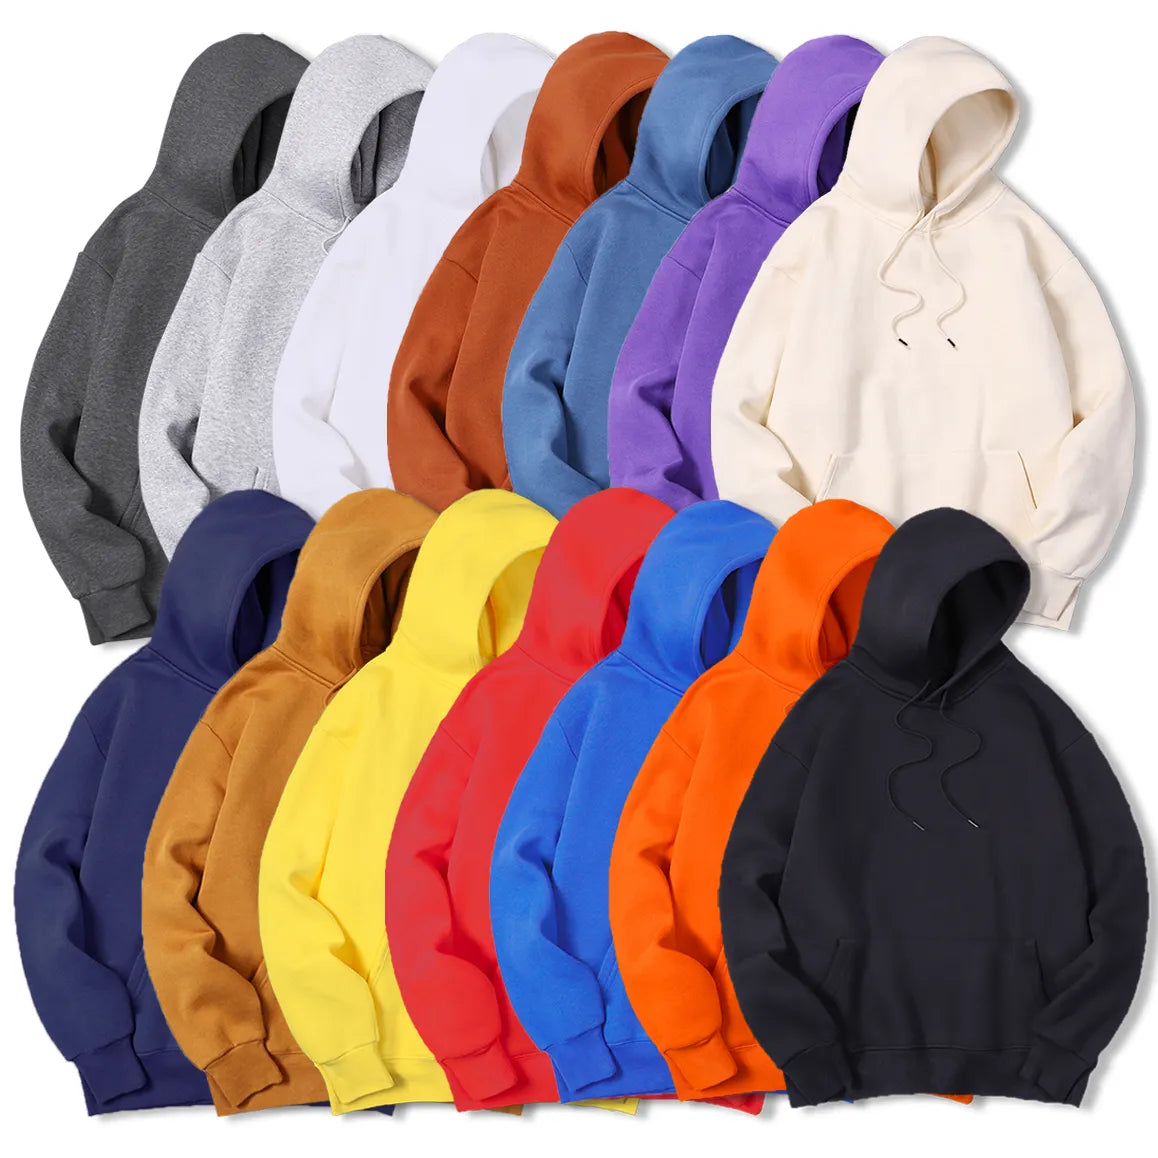 Fashion Brand Men's Hoodies New Spring Autumn Casual Hoodies Sweatshirts Men/Women Tops Candy Solid Color Hoodies Sweatshirt